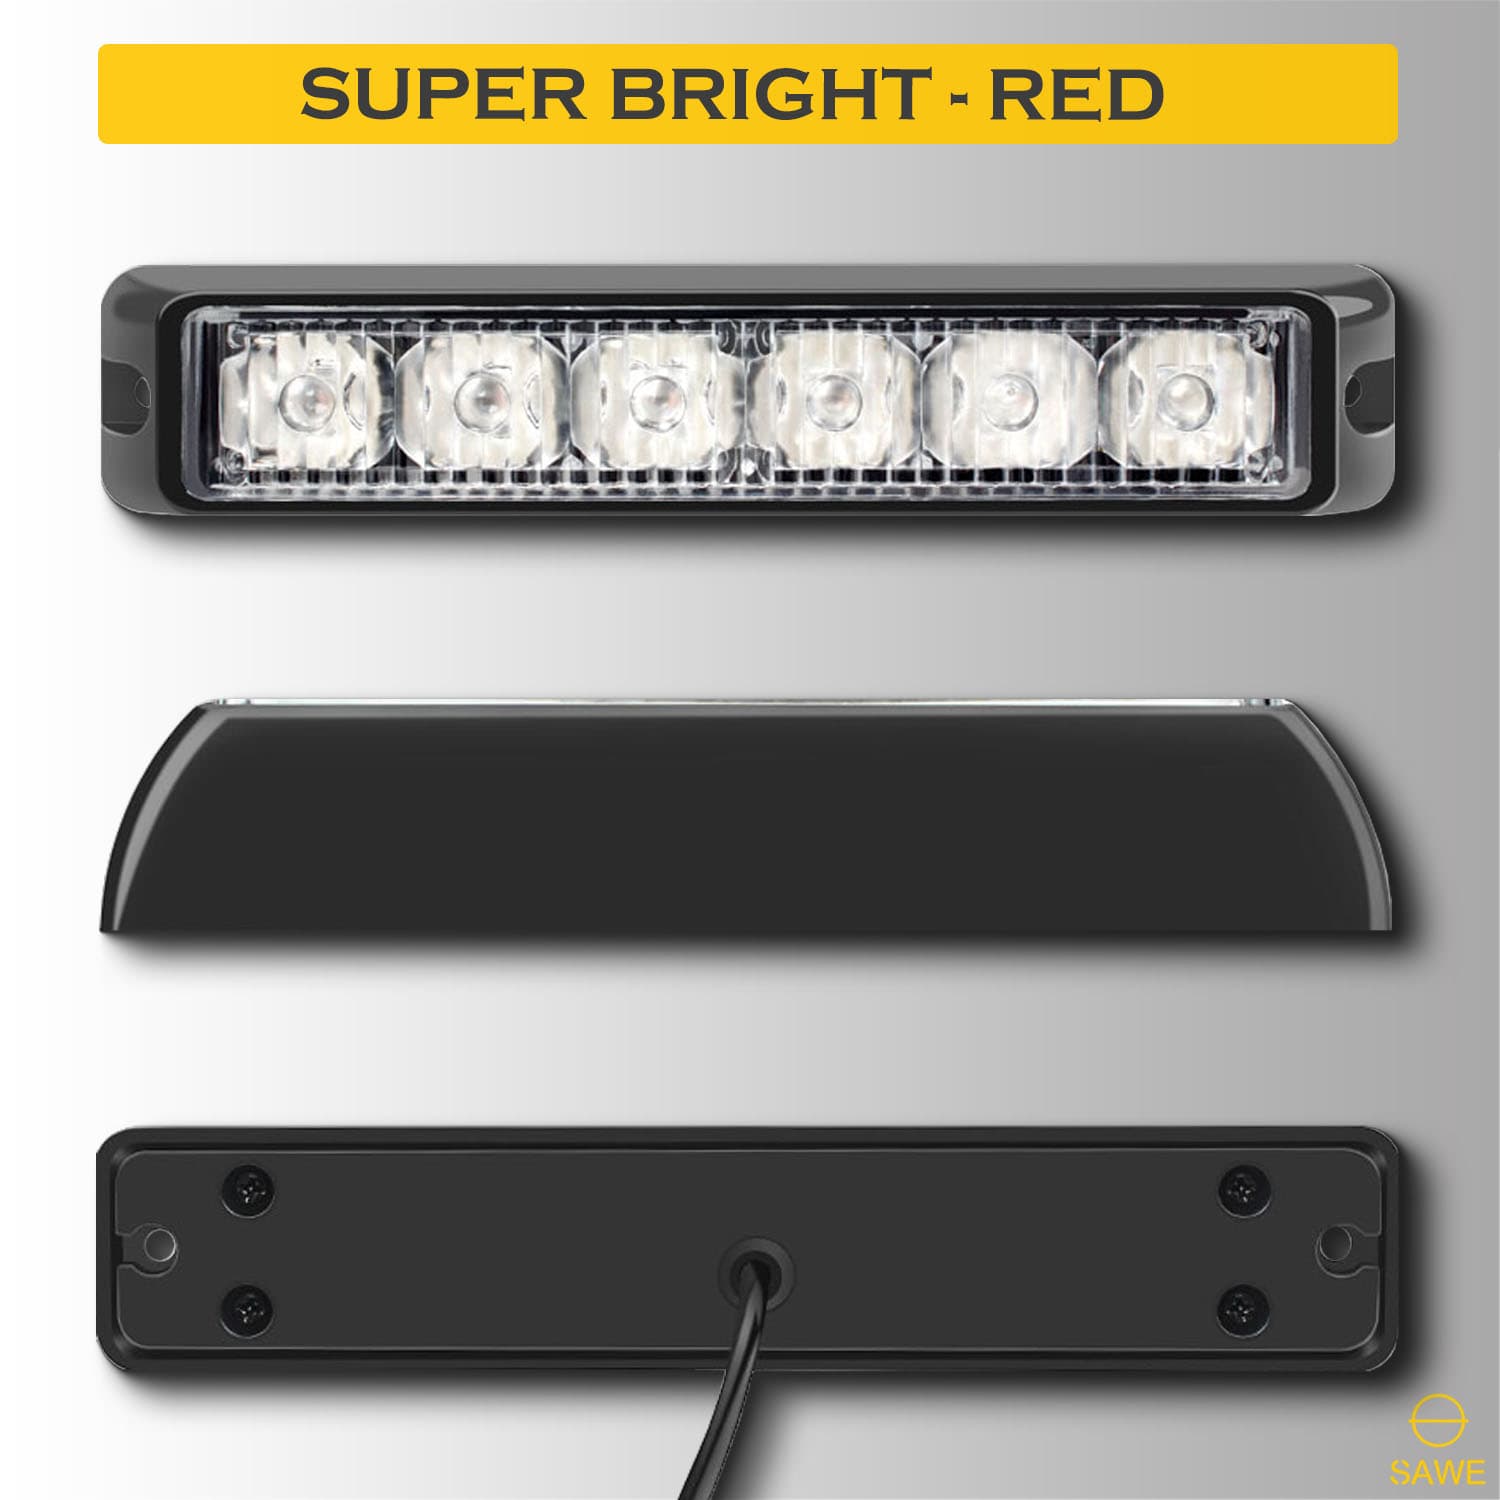 Premier Emergency LED Strobe Lights Bar for Offroad Car Truck Warning Hazard Flash Grille and Surface Mount Light - Red 6-LED